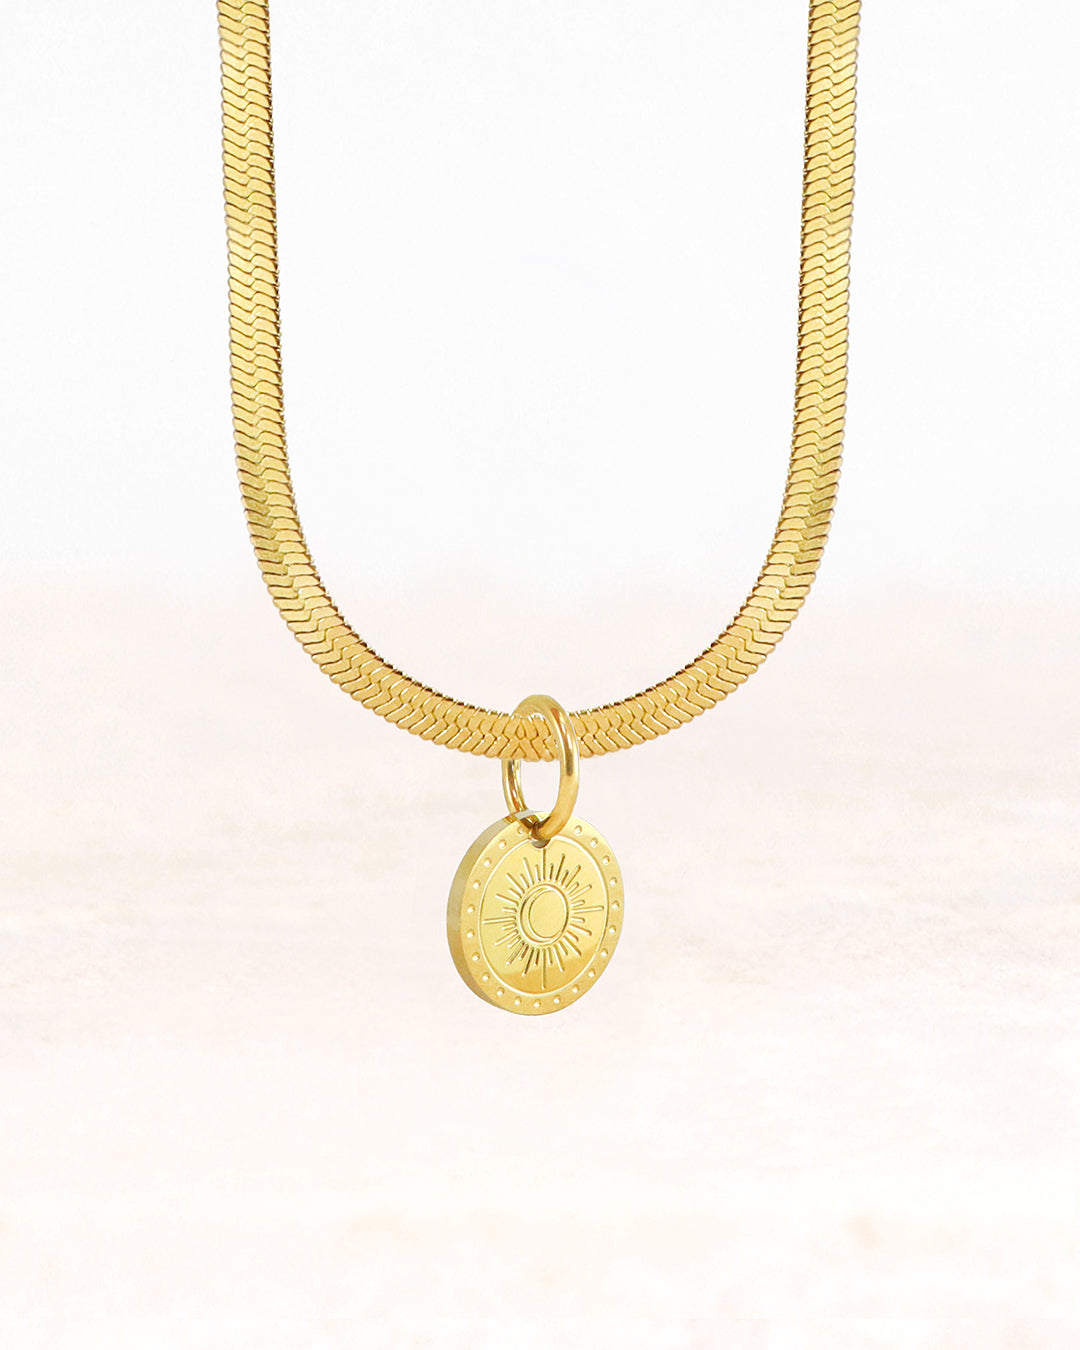 CUS® Jewellery set Mira necklace 3mm and Luna charm Sun & Moon - Dreams & Creativity